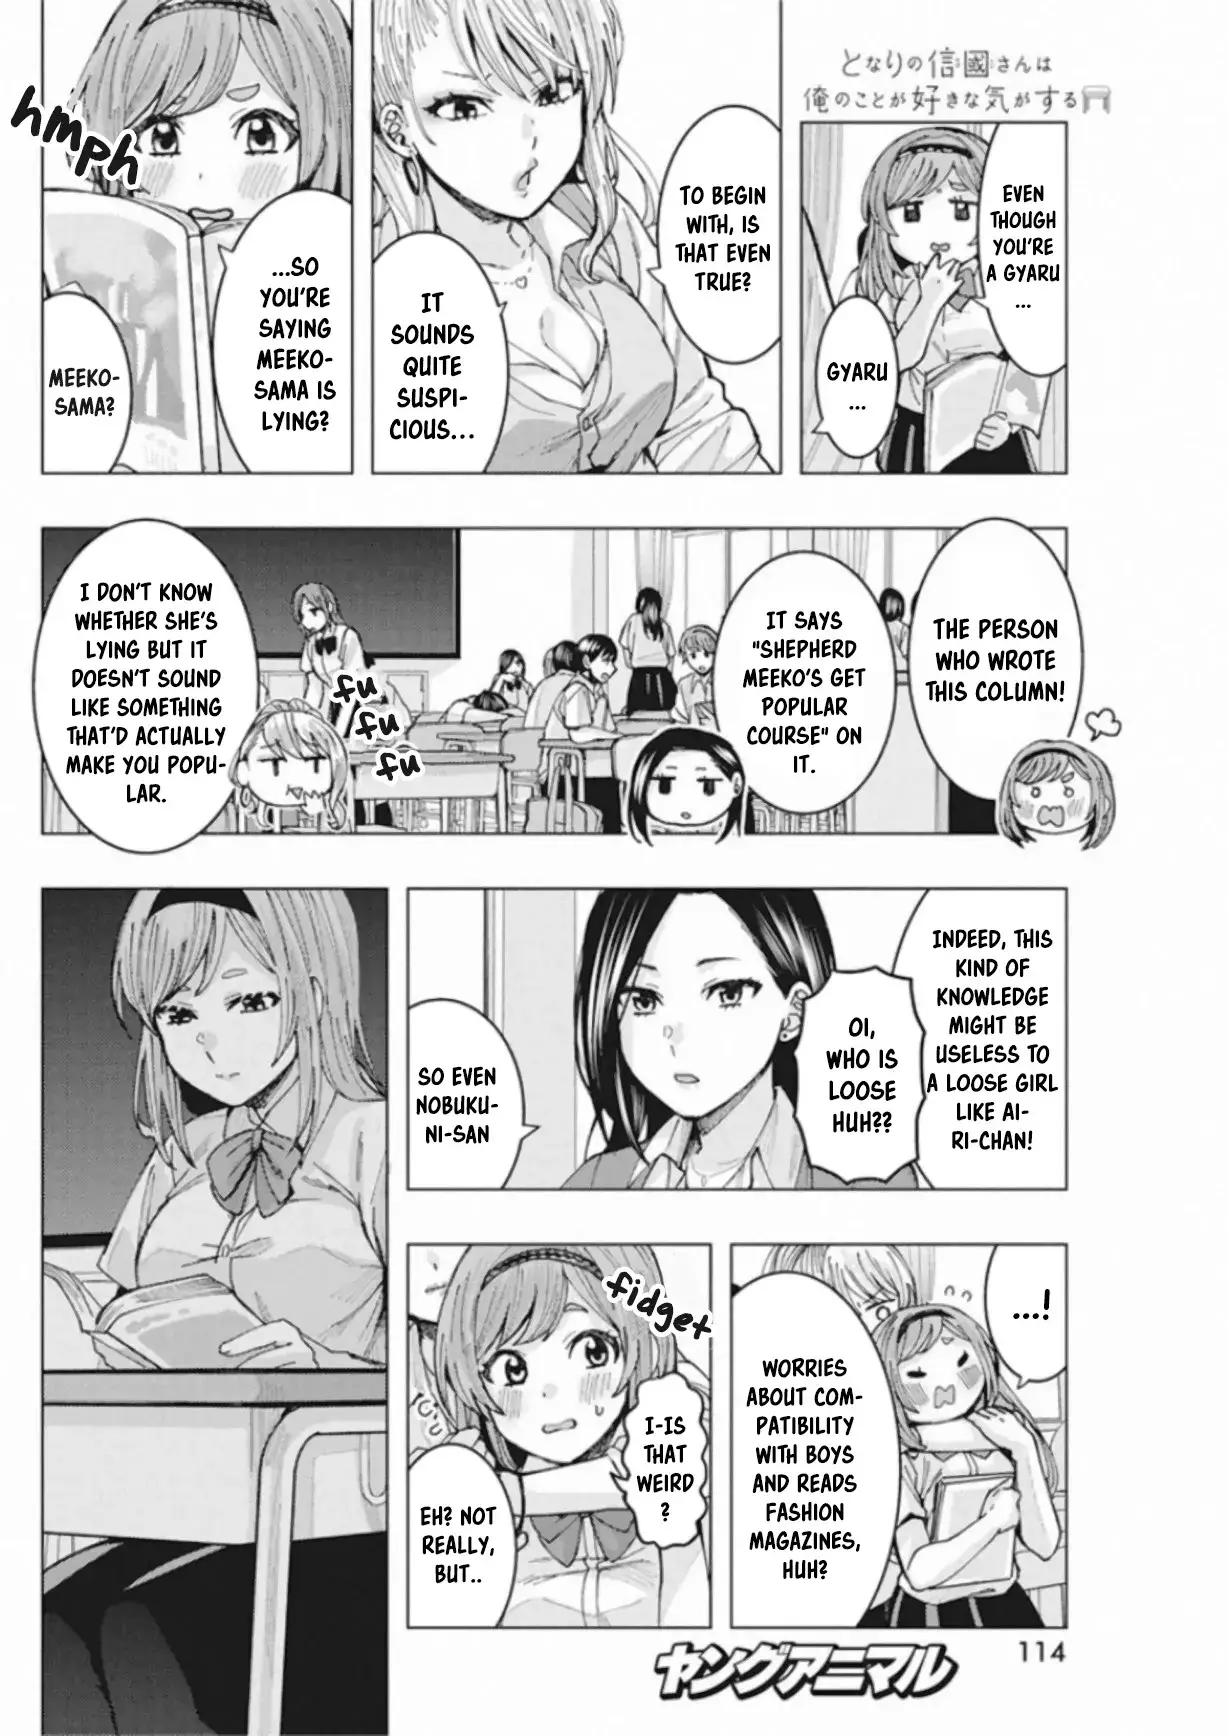 "nobukuni-San" Does She Like Me? - 4 page 6